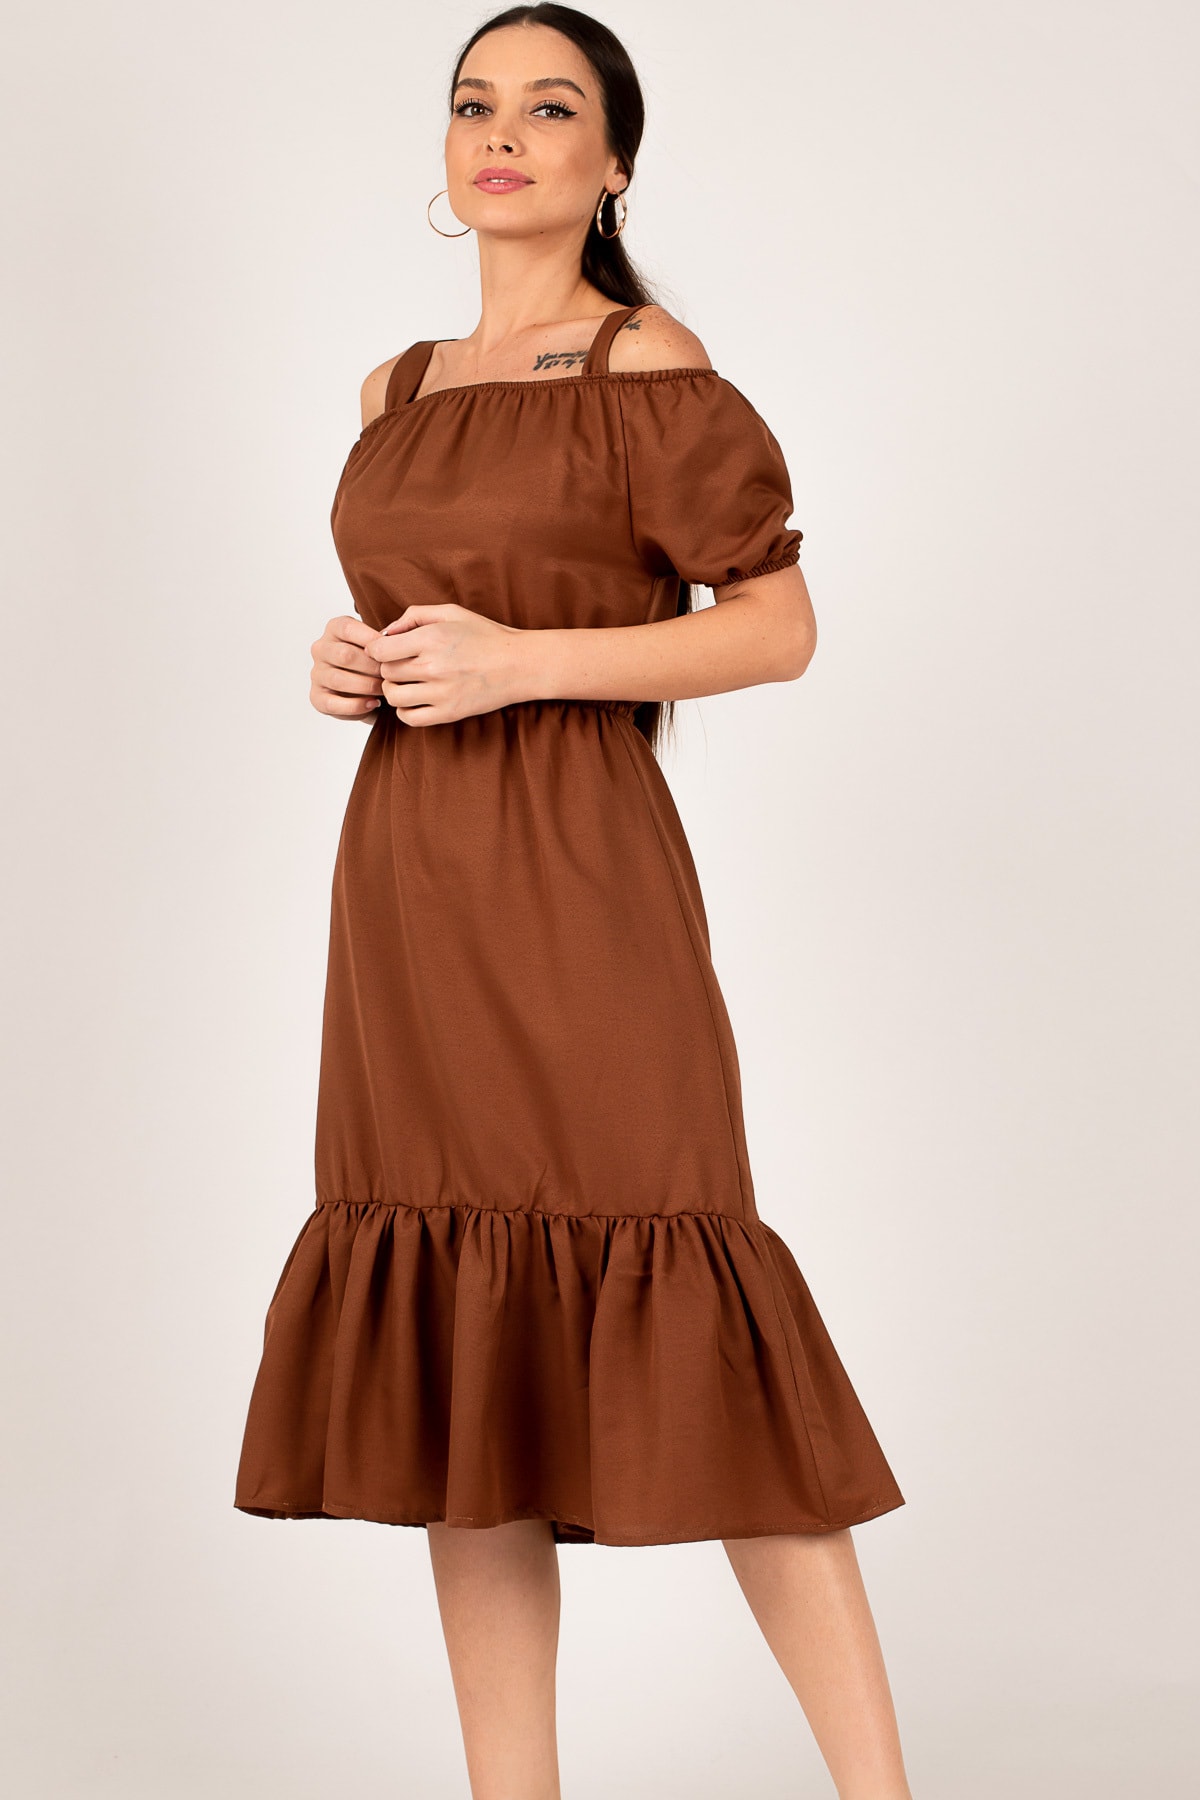 armonika Women's Brown Dress with Elastic Waist, Straps